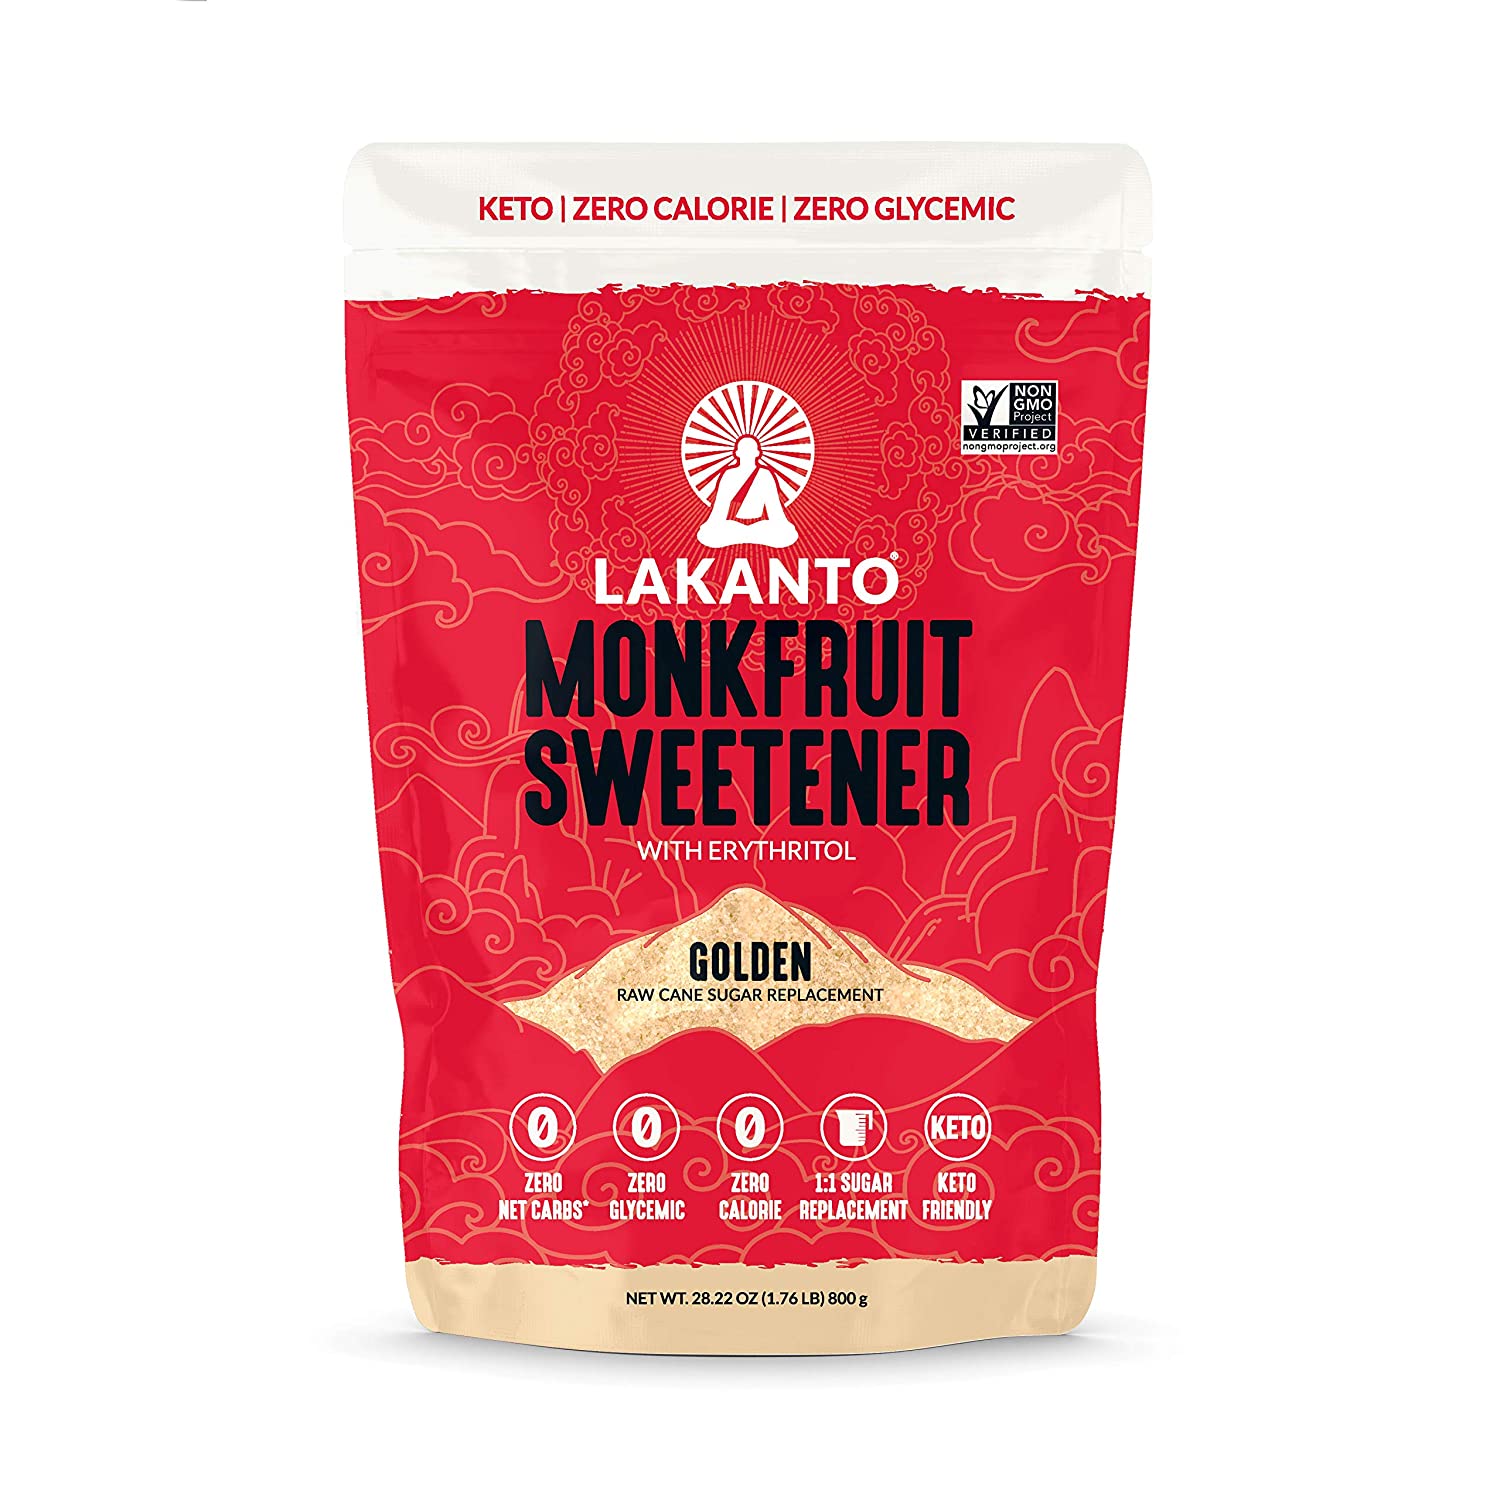 Lakanto Classic Monk Fruit Sweetener - White Sugar Substitute, Zero Calorie, Keto Diet Friendly, Zero Net Carbs, Zero Glycemic, Baking, Extract, Sugar Replacement (Classic White - 3 lbs)